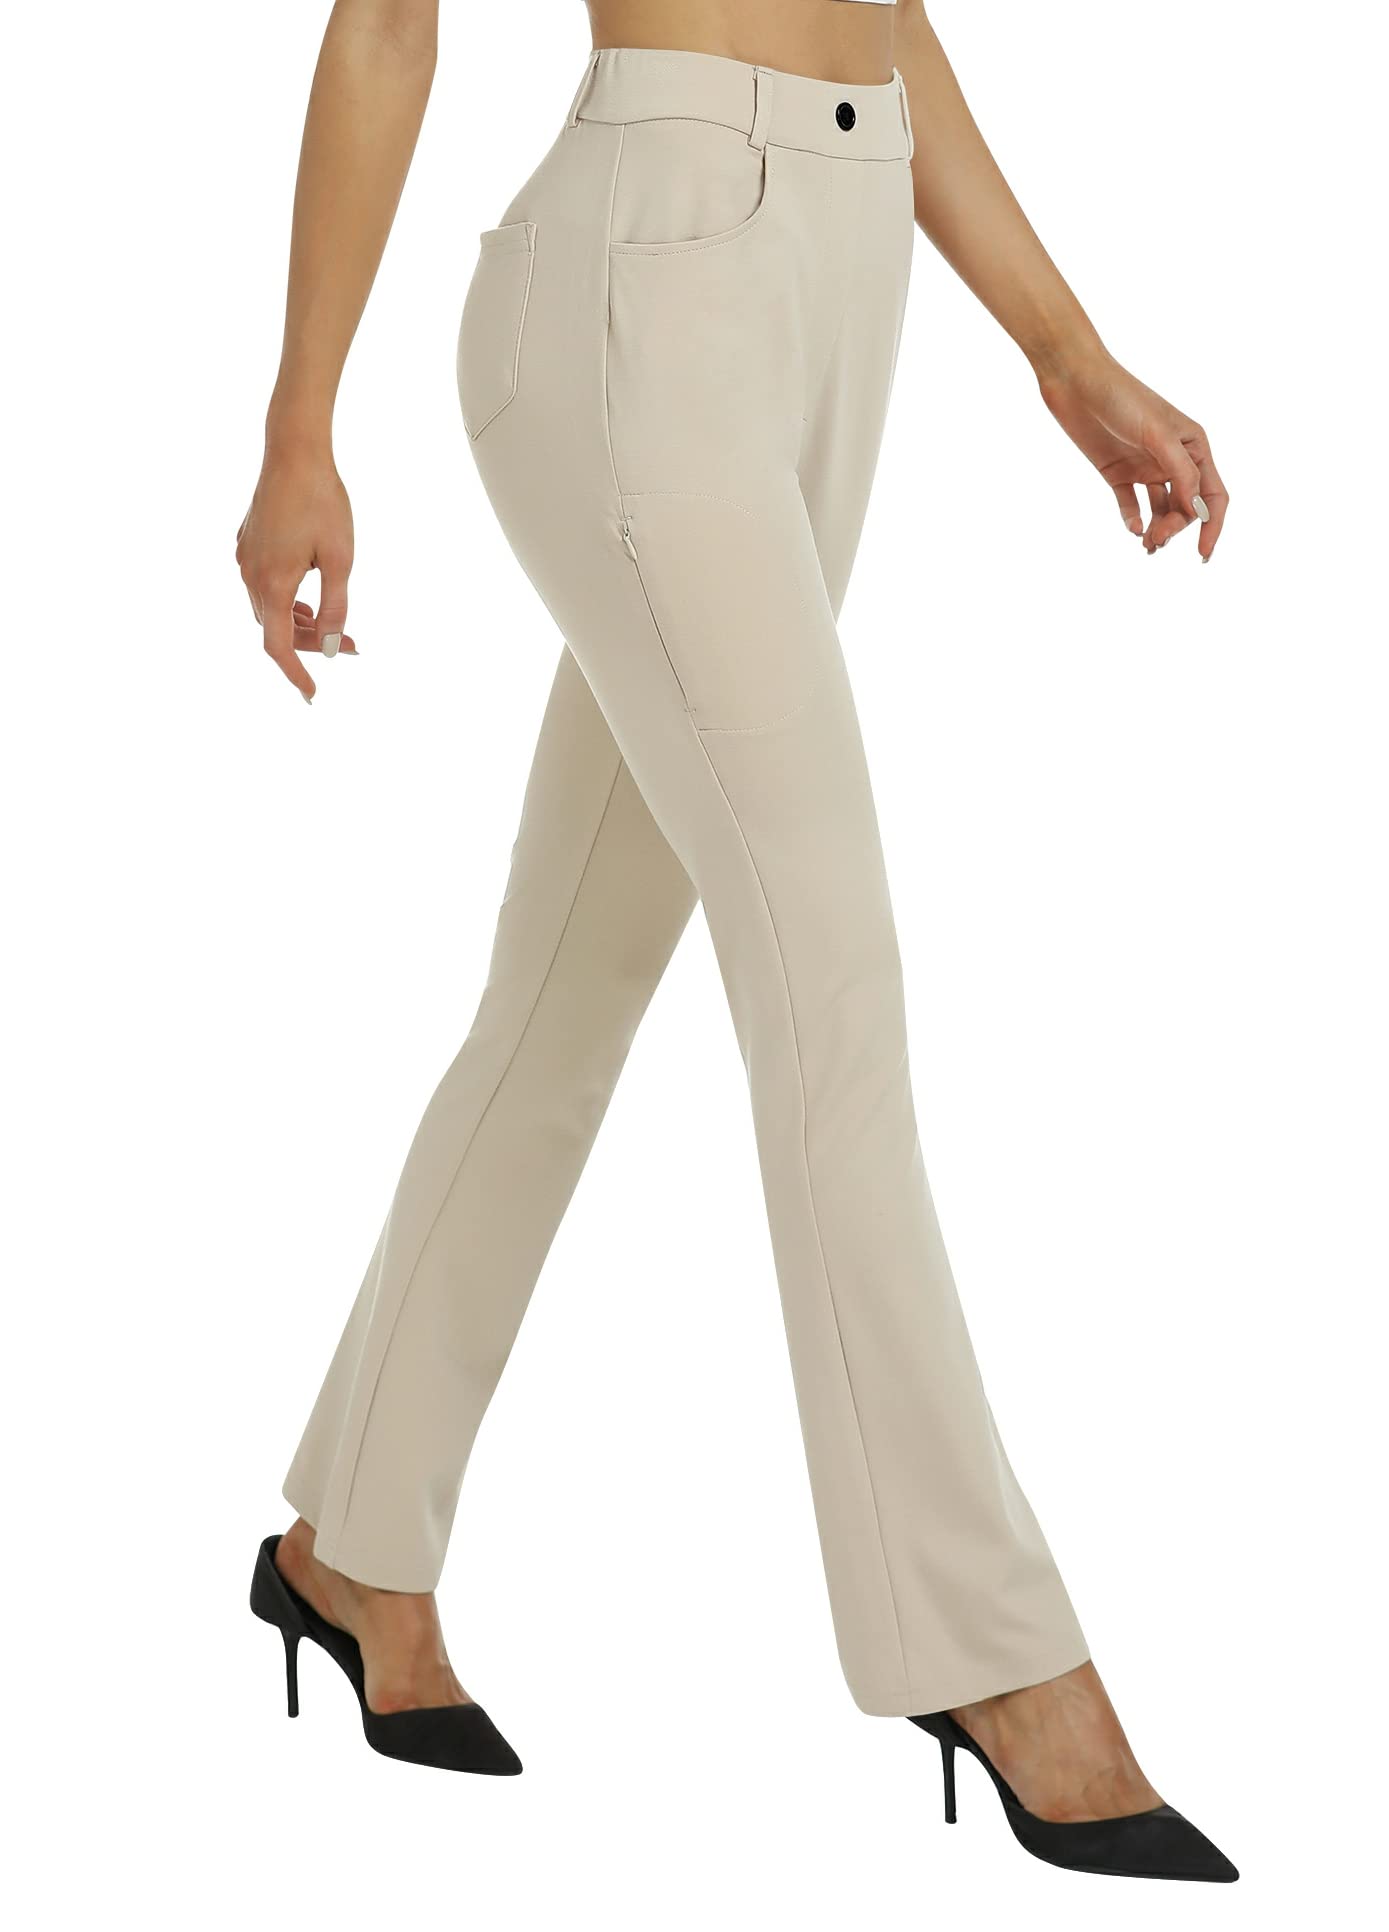 MoFiz Women's 29 Yoga Dress Pants Bootcut Leg Elastic Waist Work Business  Office Stretchy Slacks Casual Golf with Pockets A01-light Khaki Medium